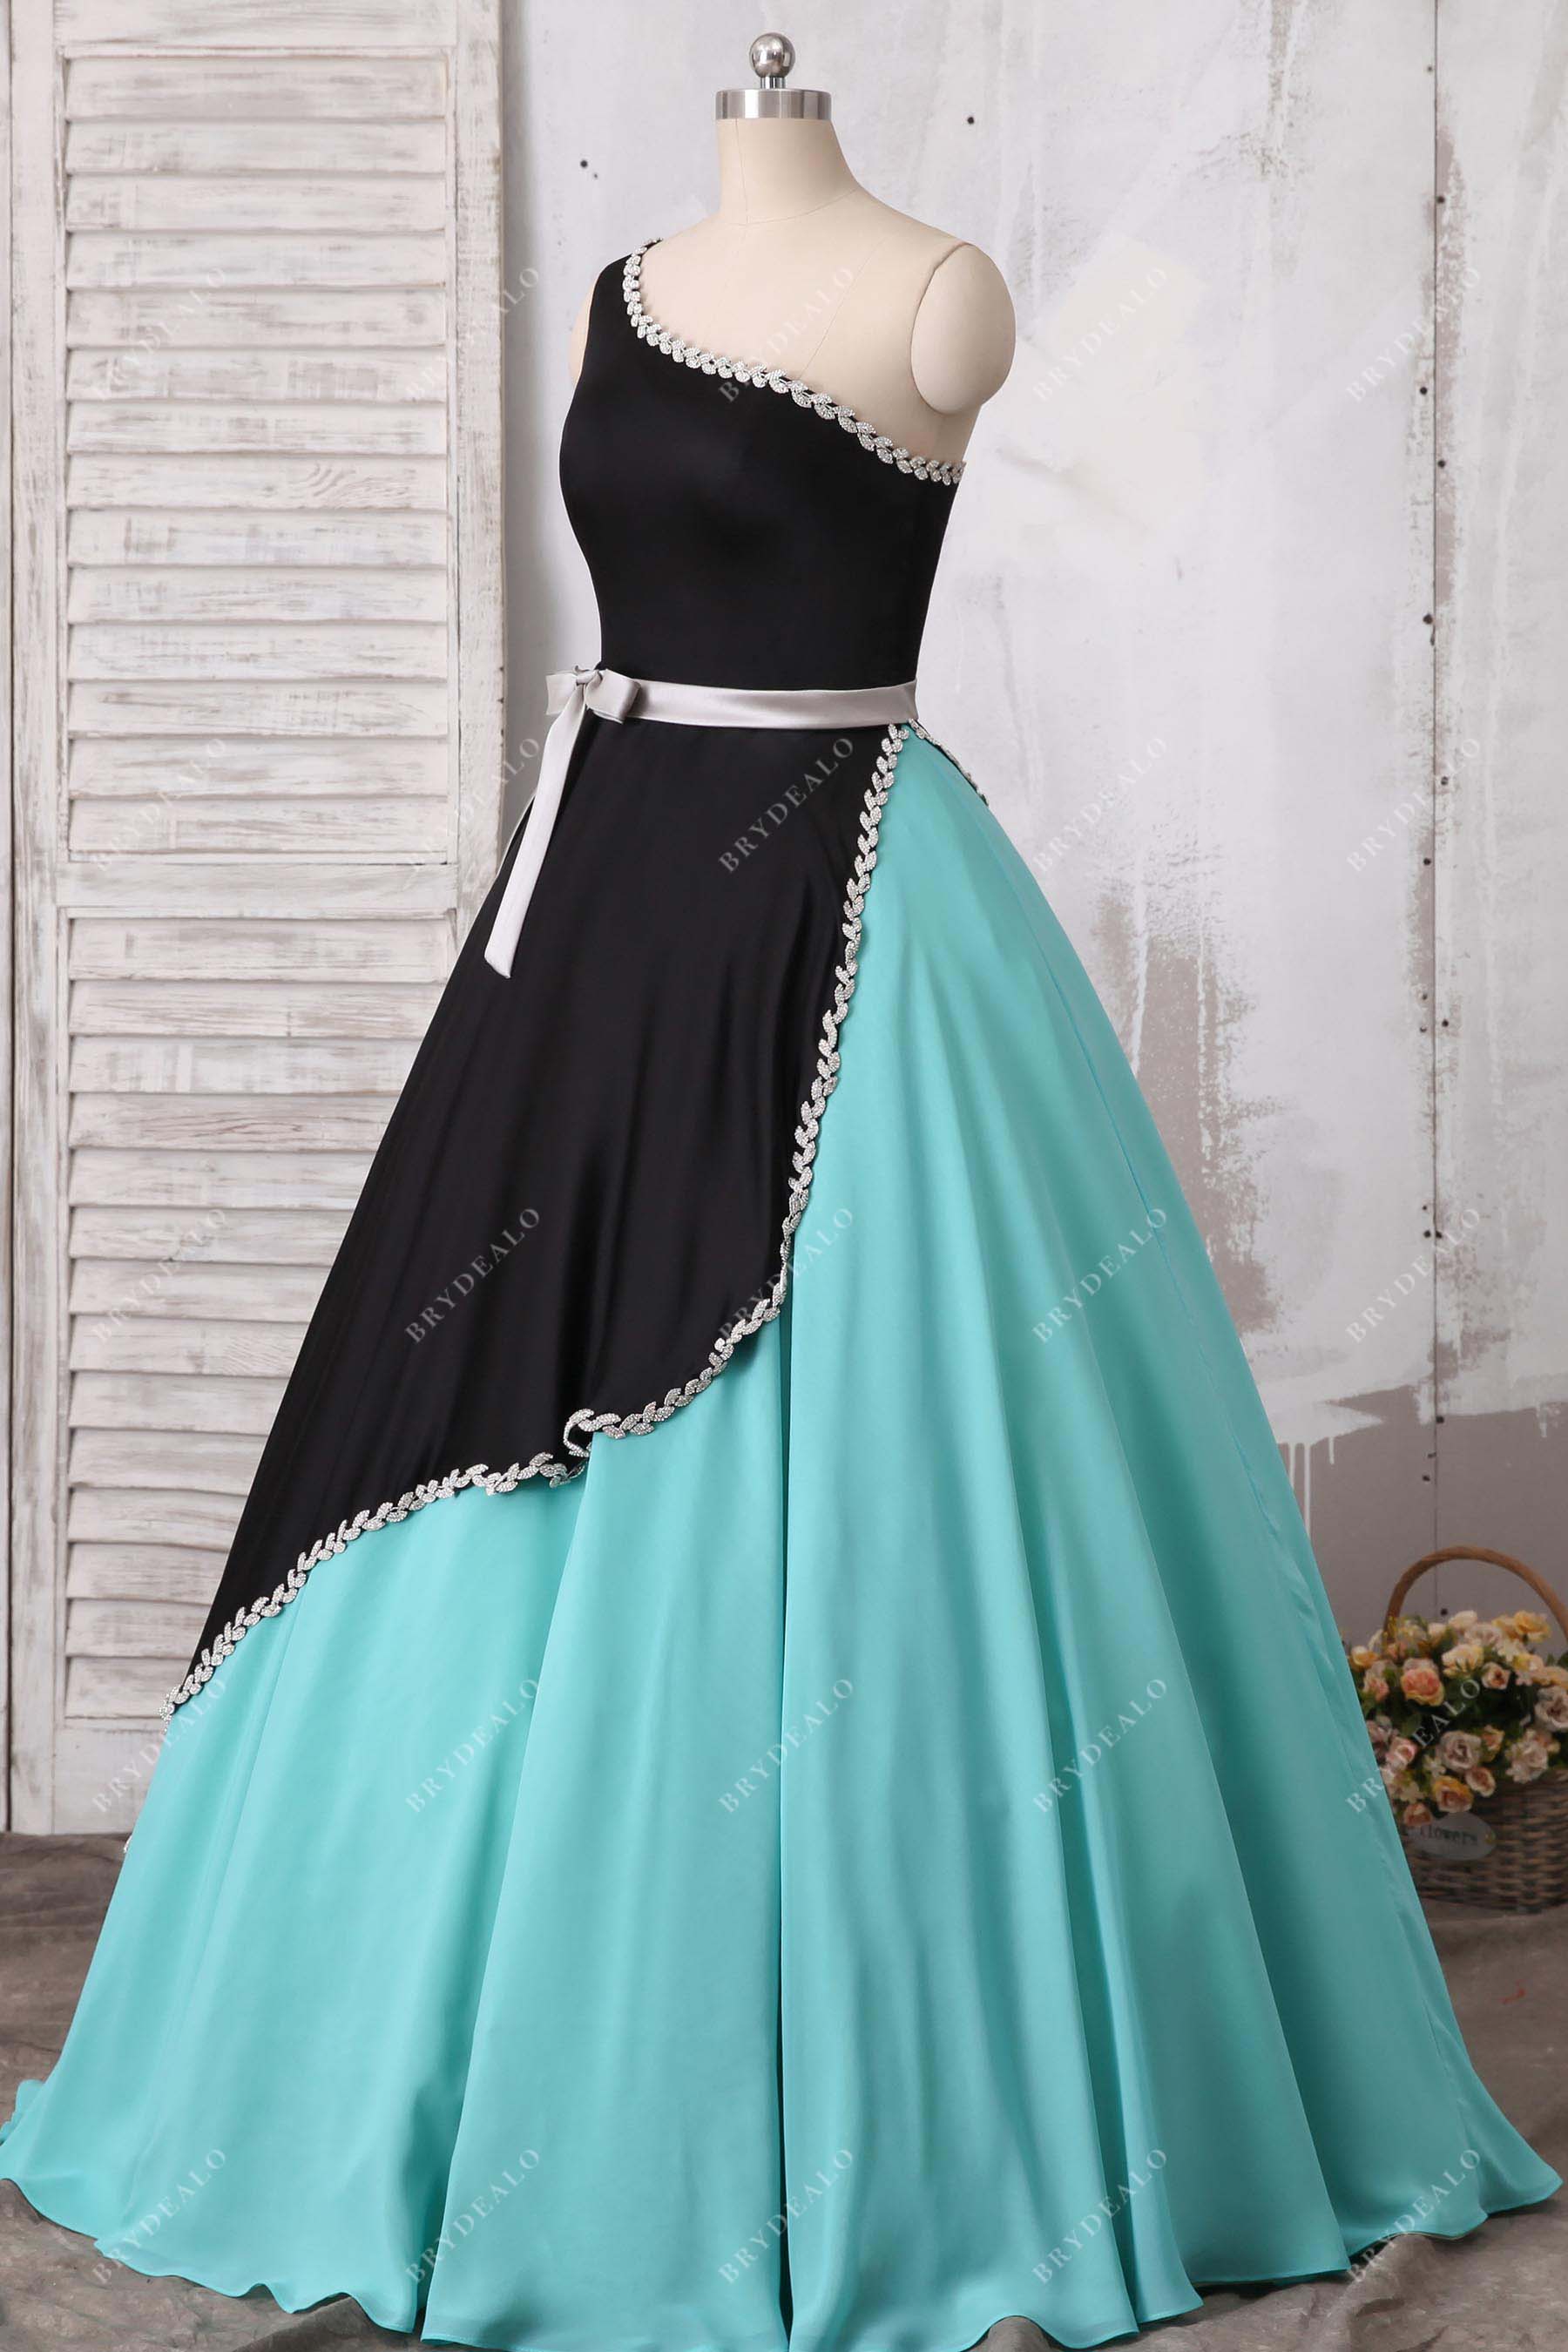 black taffeta two-tone ball gown dress